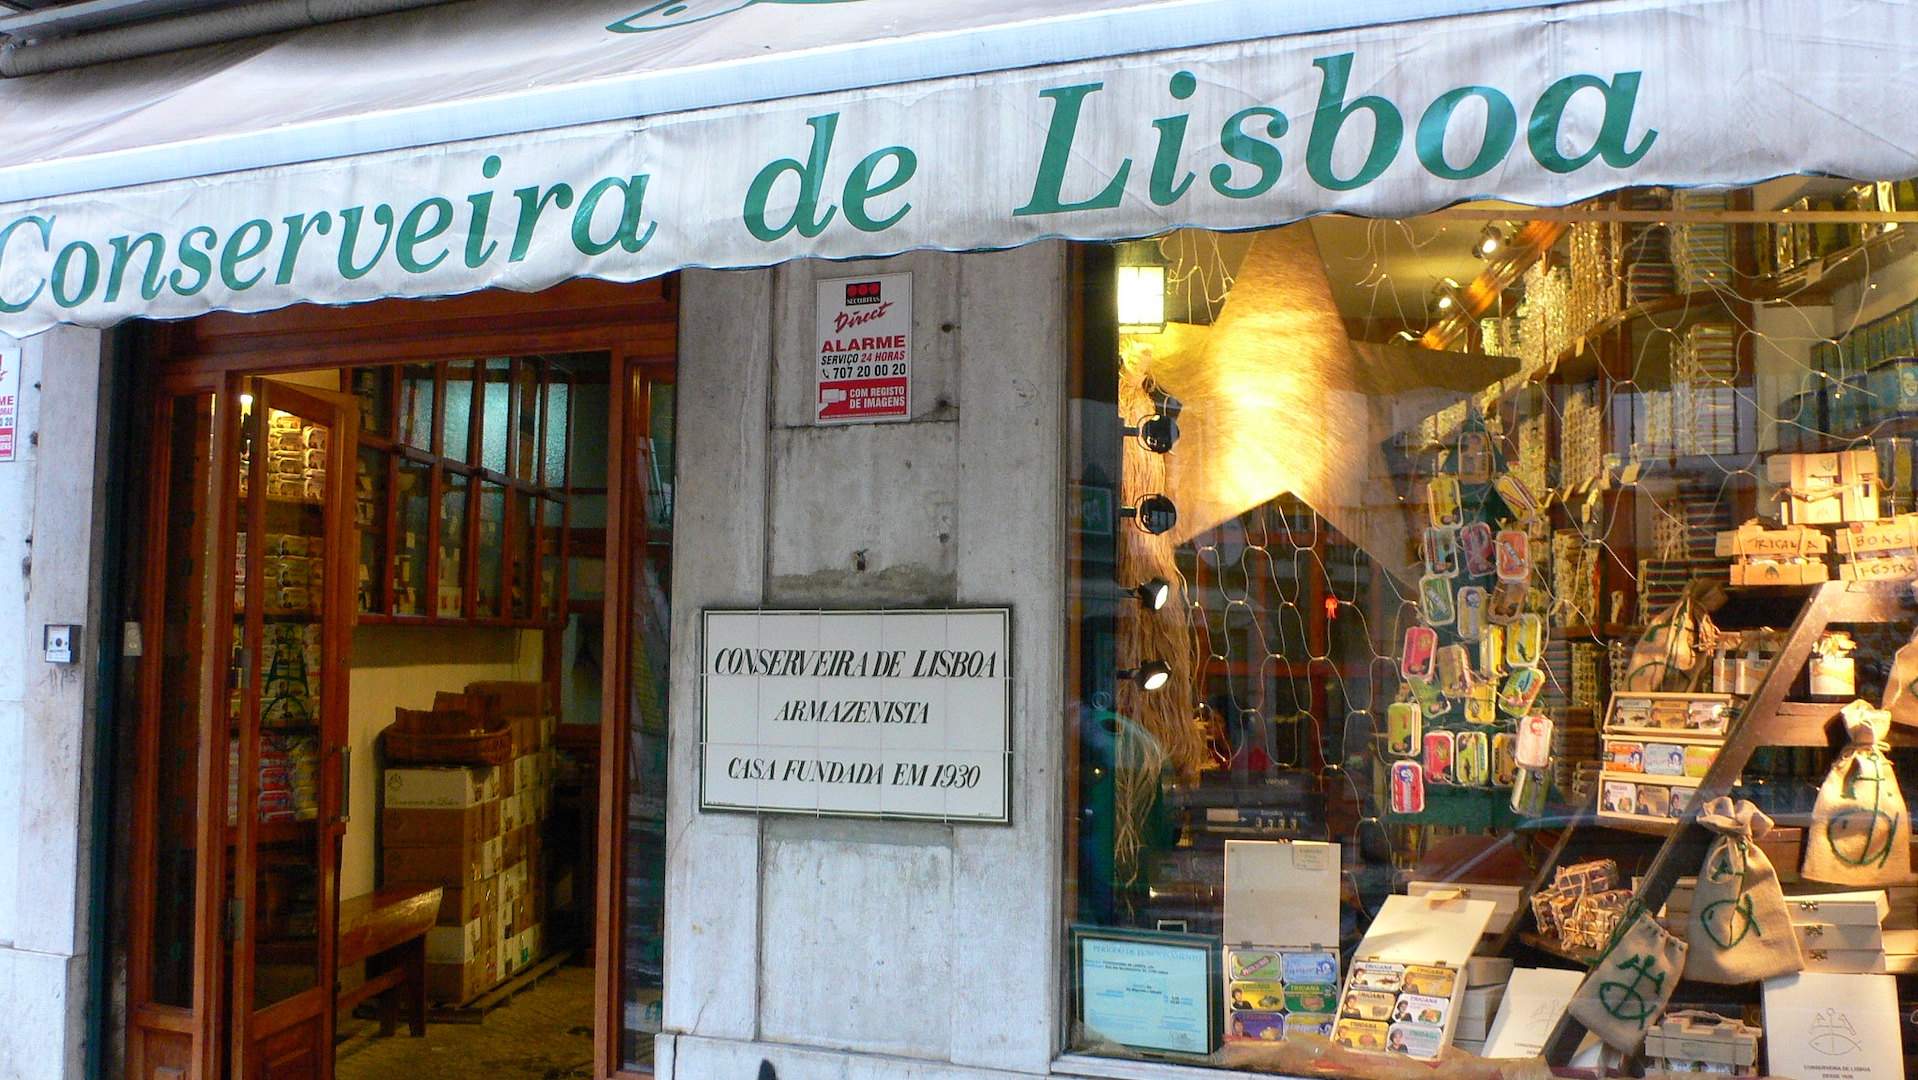 Conserveira de Lisboa